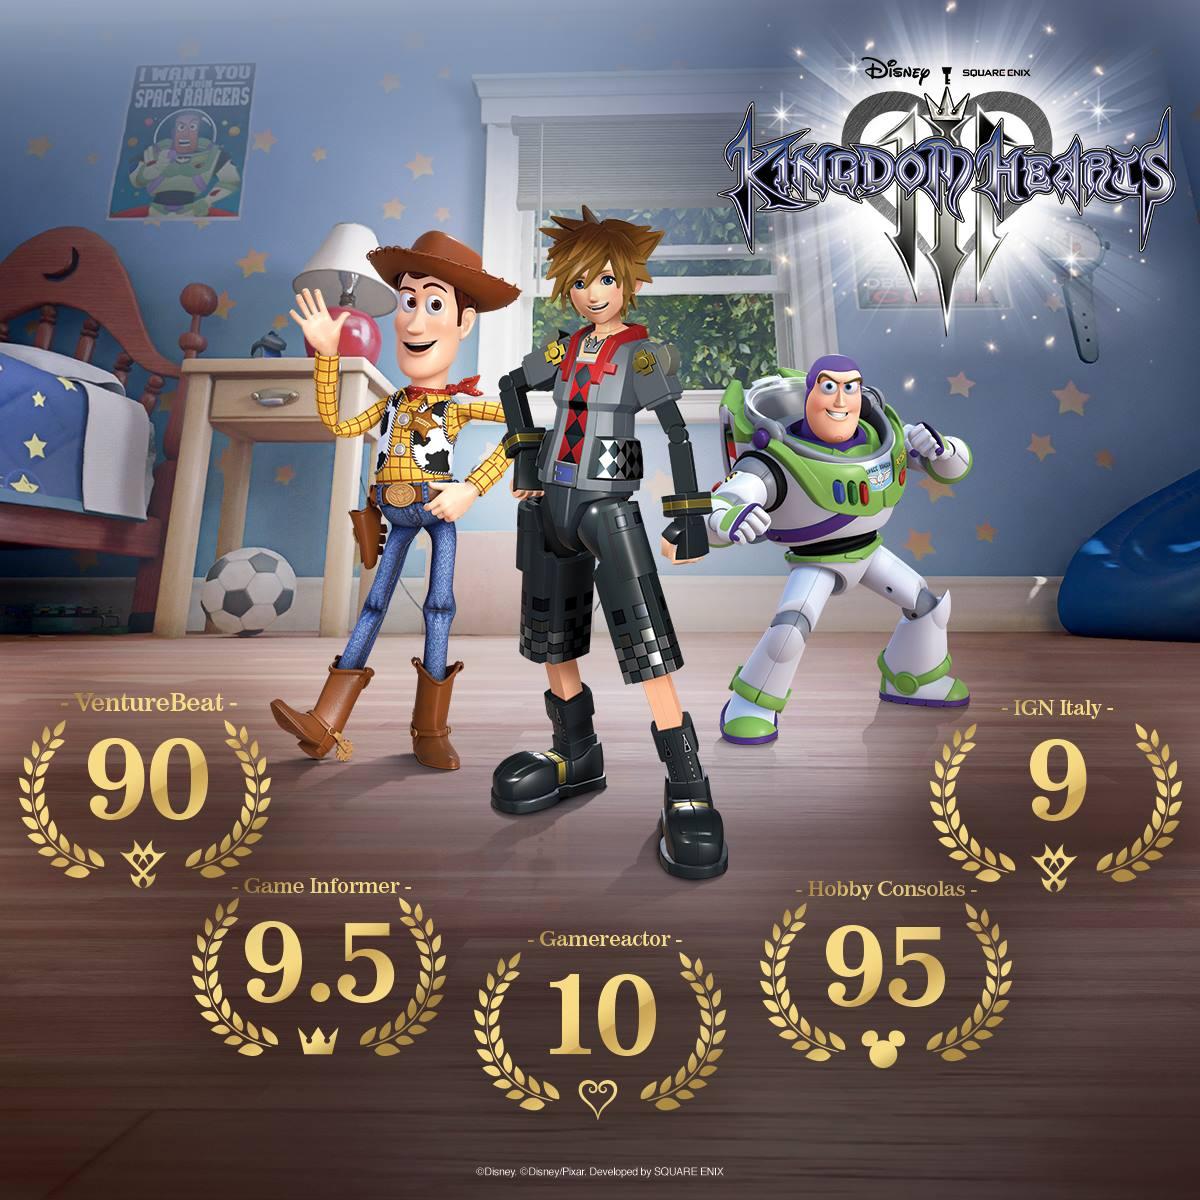 Kingdom Hearts 3 review